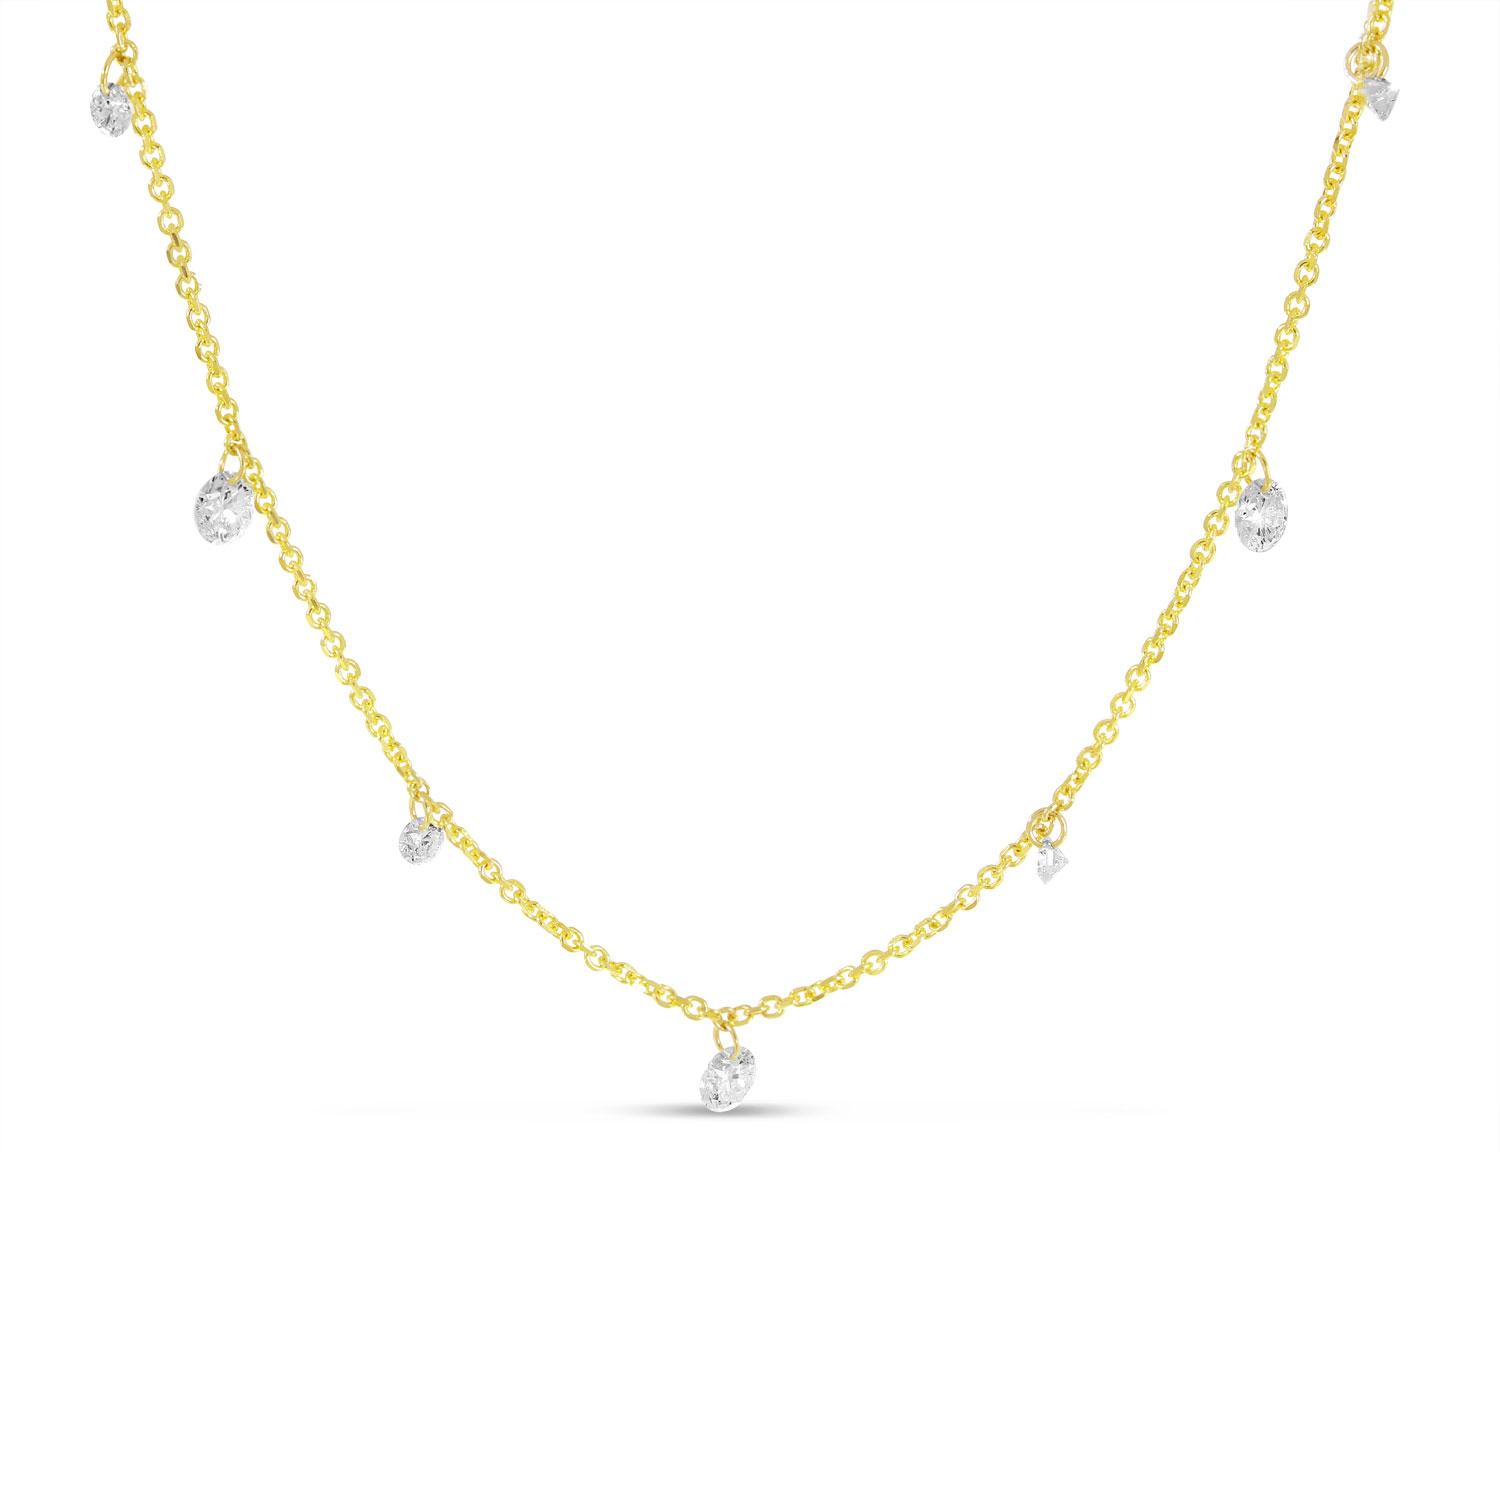 14K Yellow Gold 0.75 Ct Dashing Diamond Bead Chain 18 inch Necklace